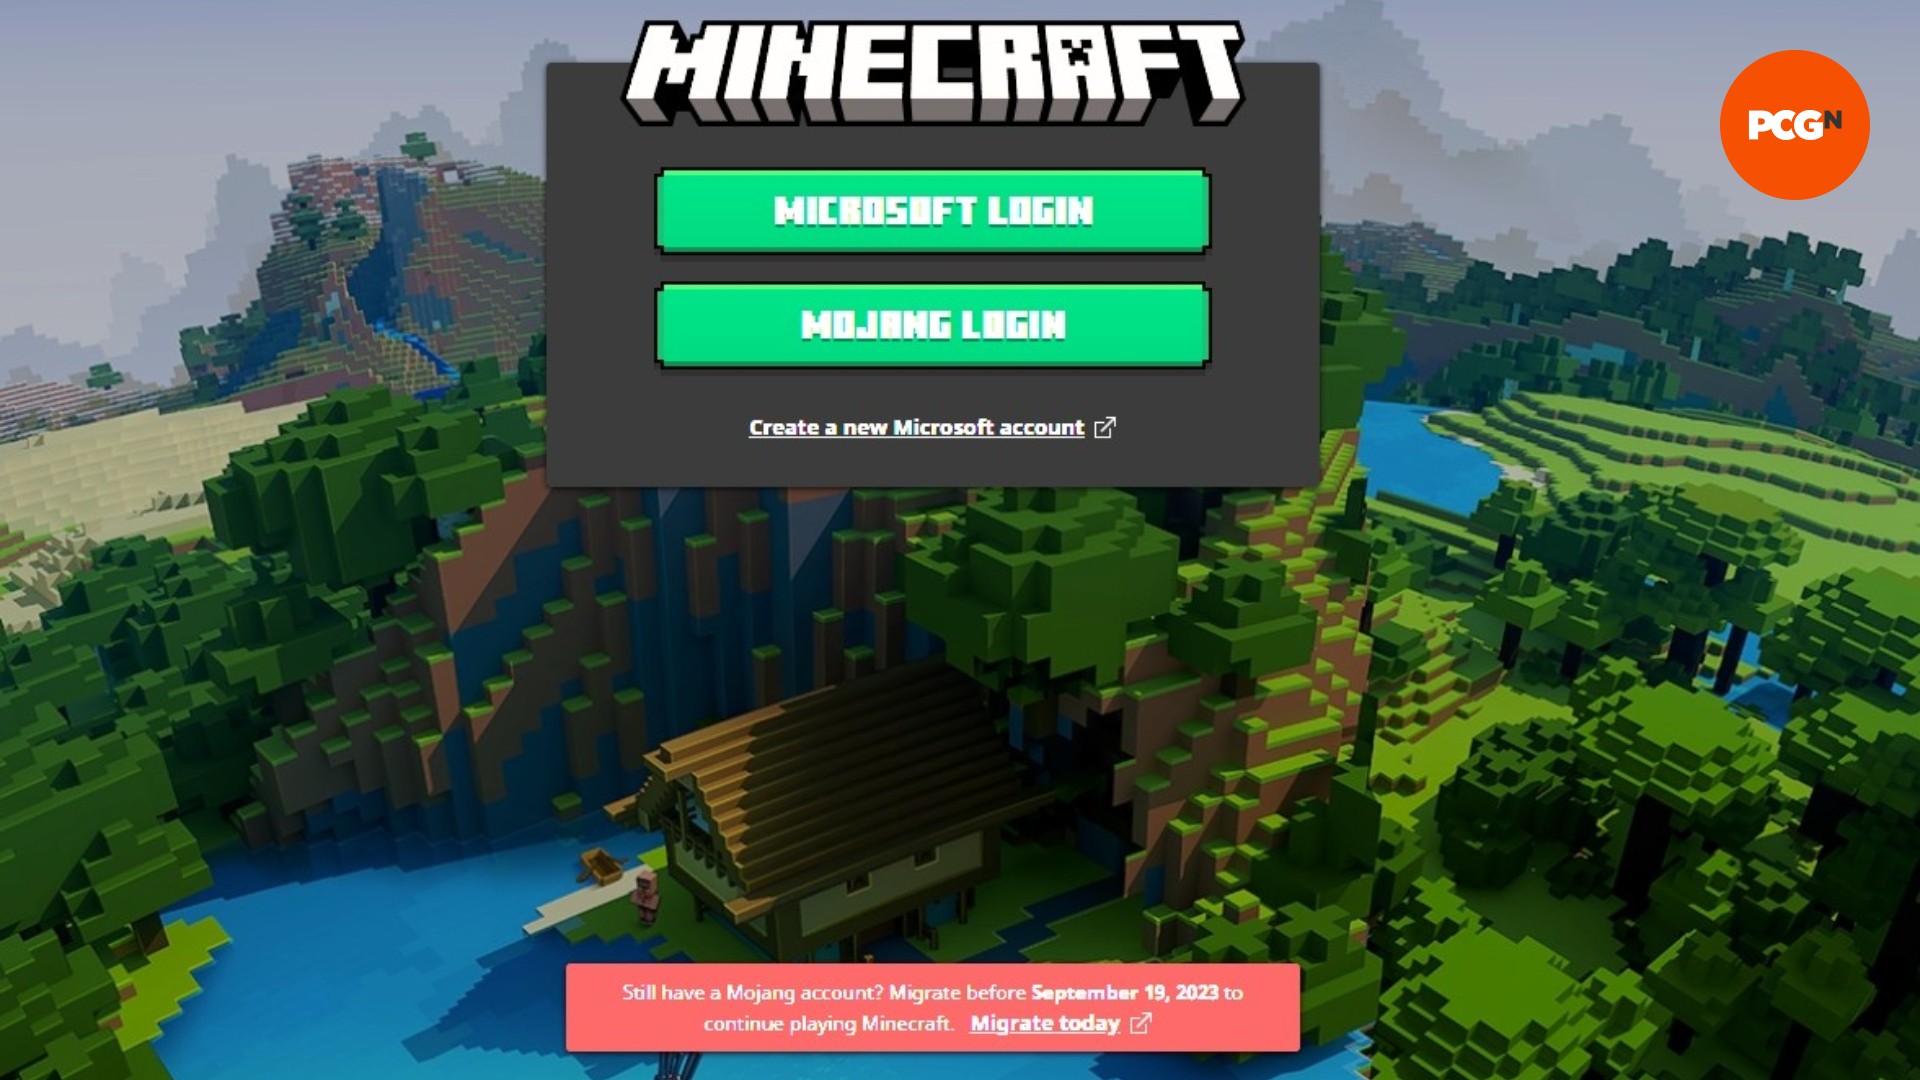 Add a Mojang account? - Minecraften